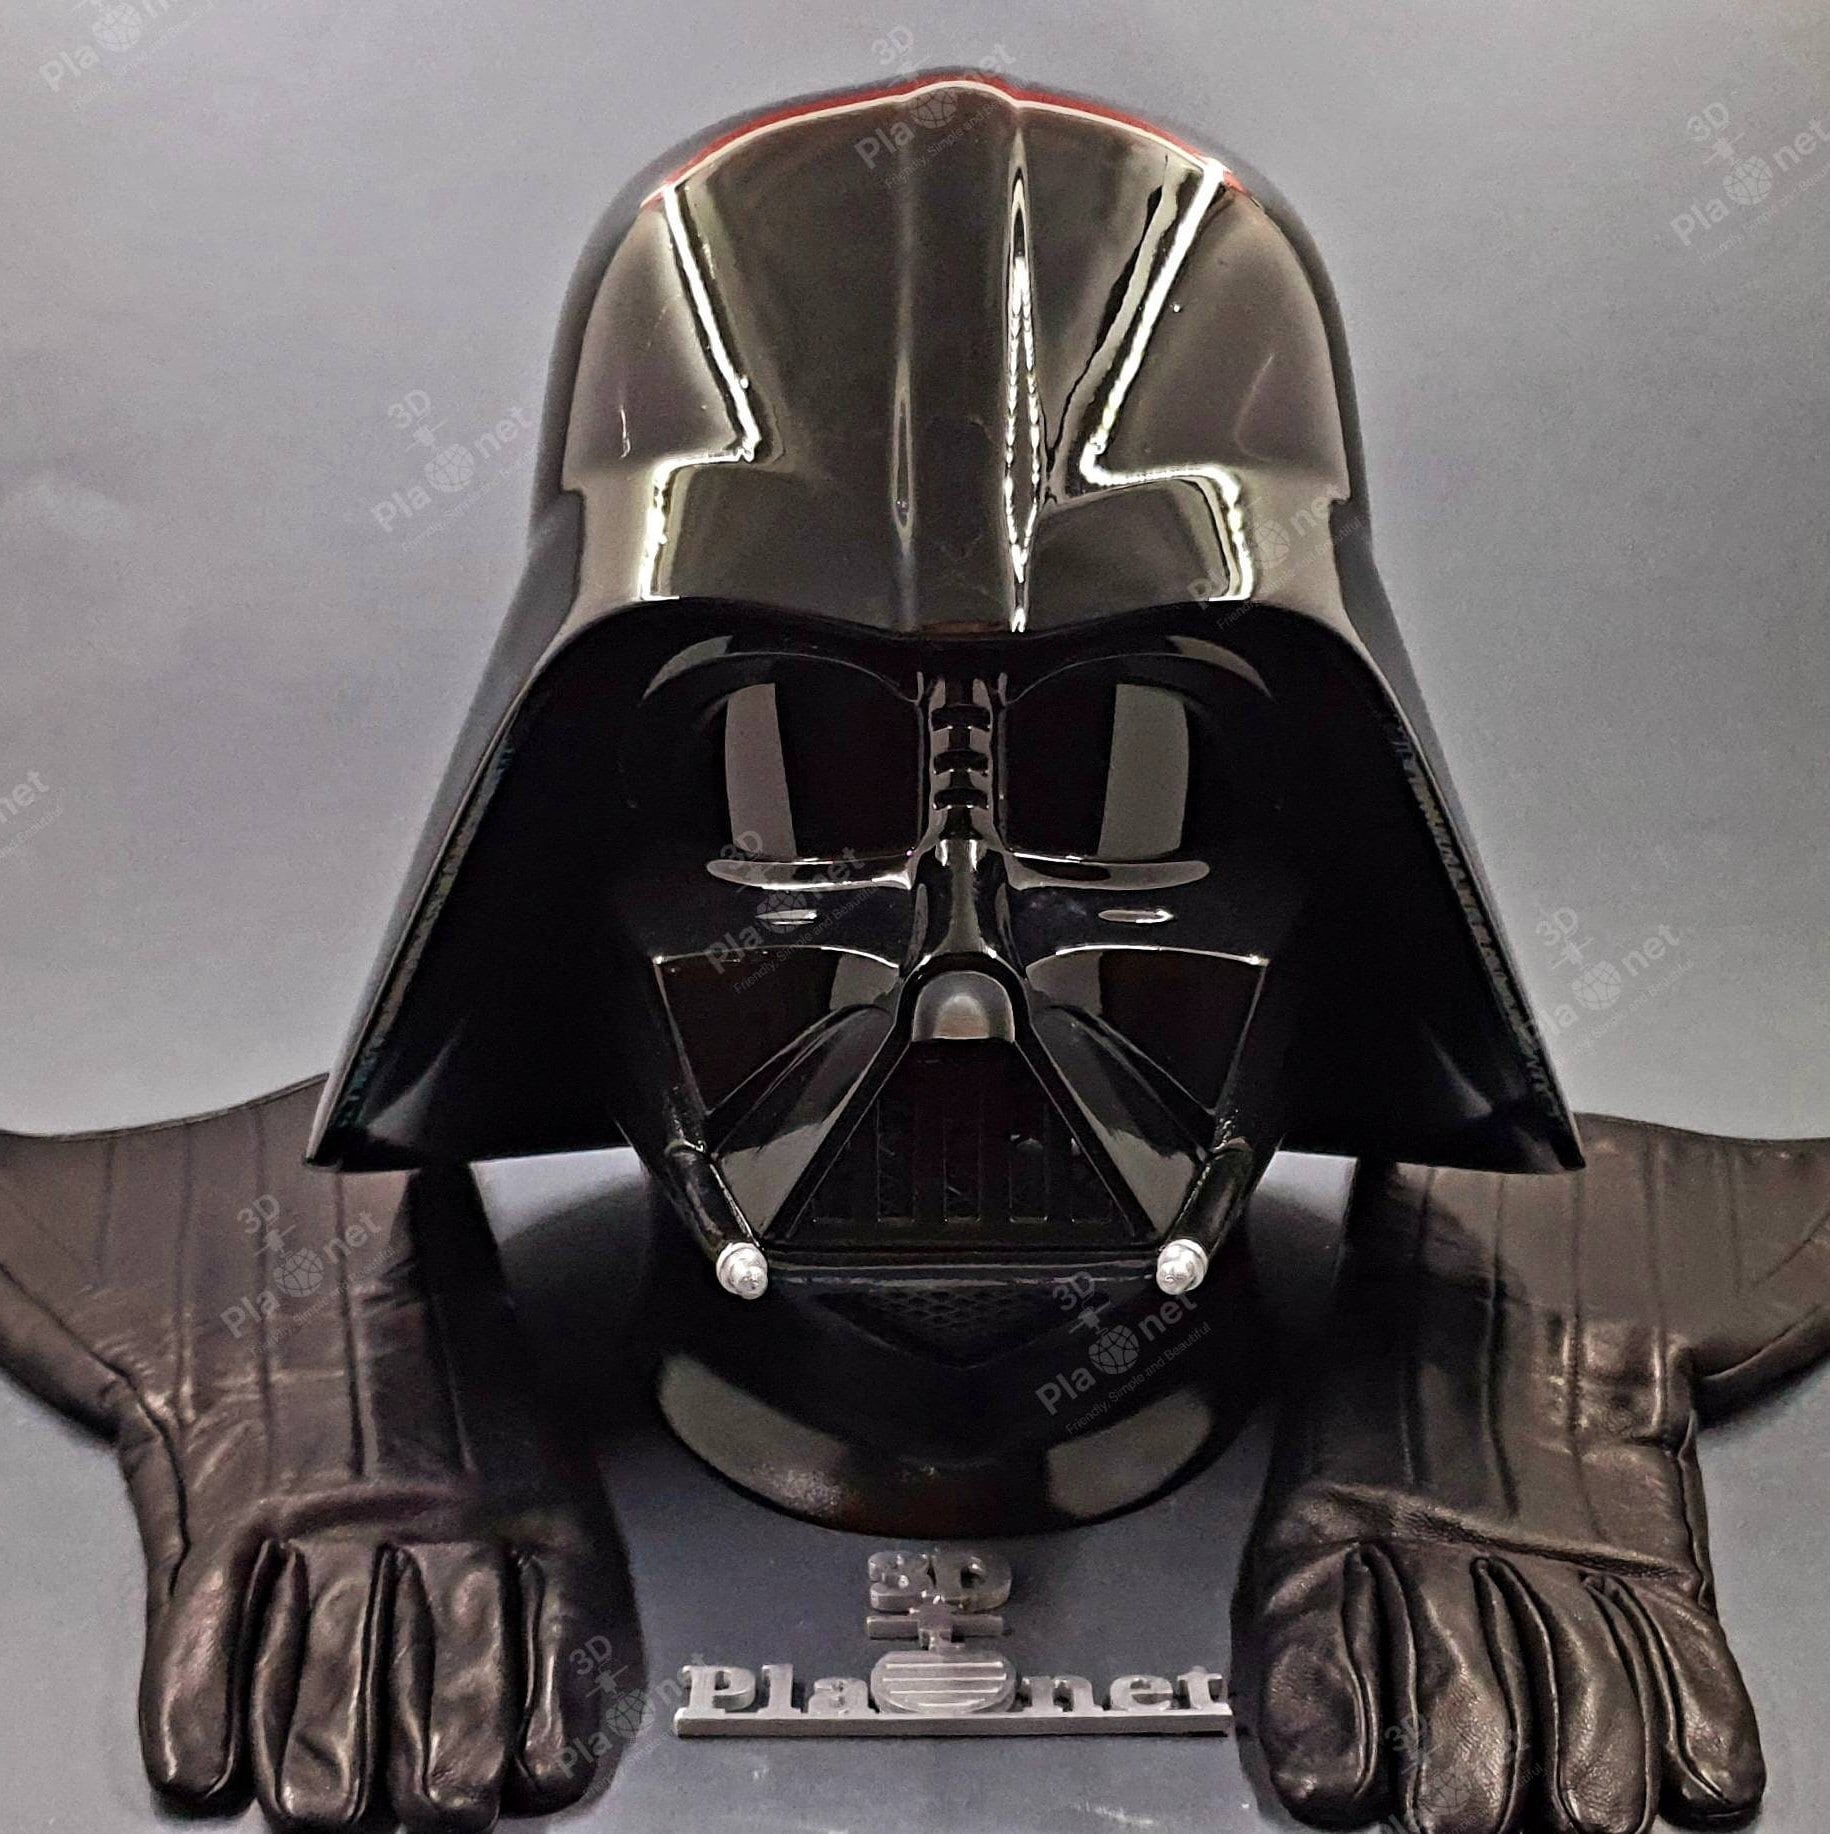 Disney Star Wars Vader Head Die Cut Helmet Patch Officially Licensed Iron on